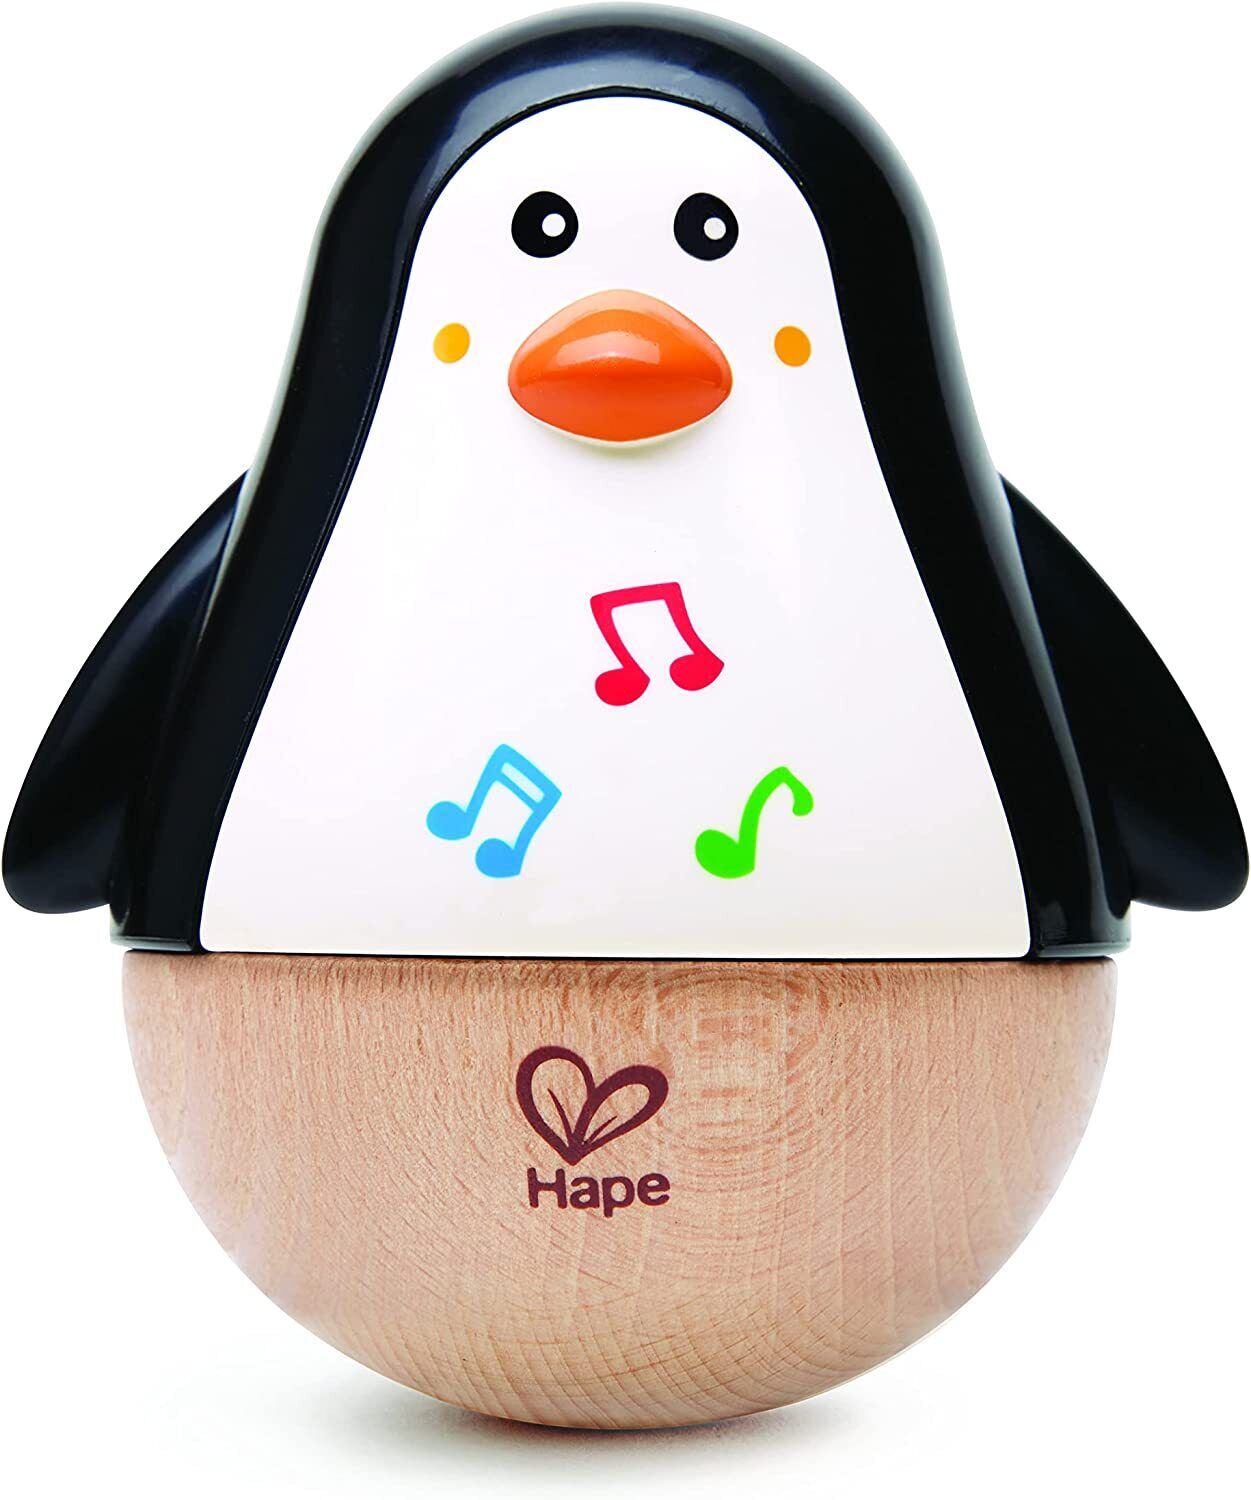 Hape Penguin Musical Toy, Black